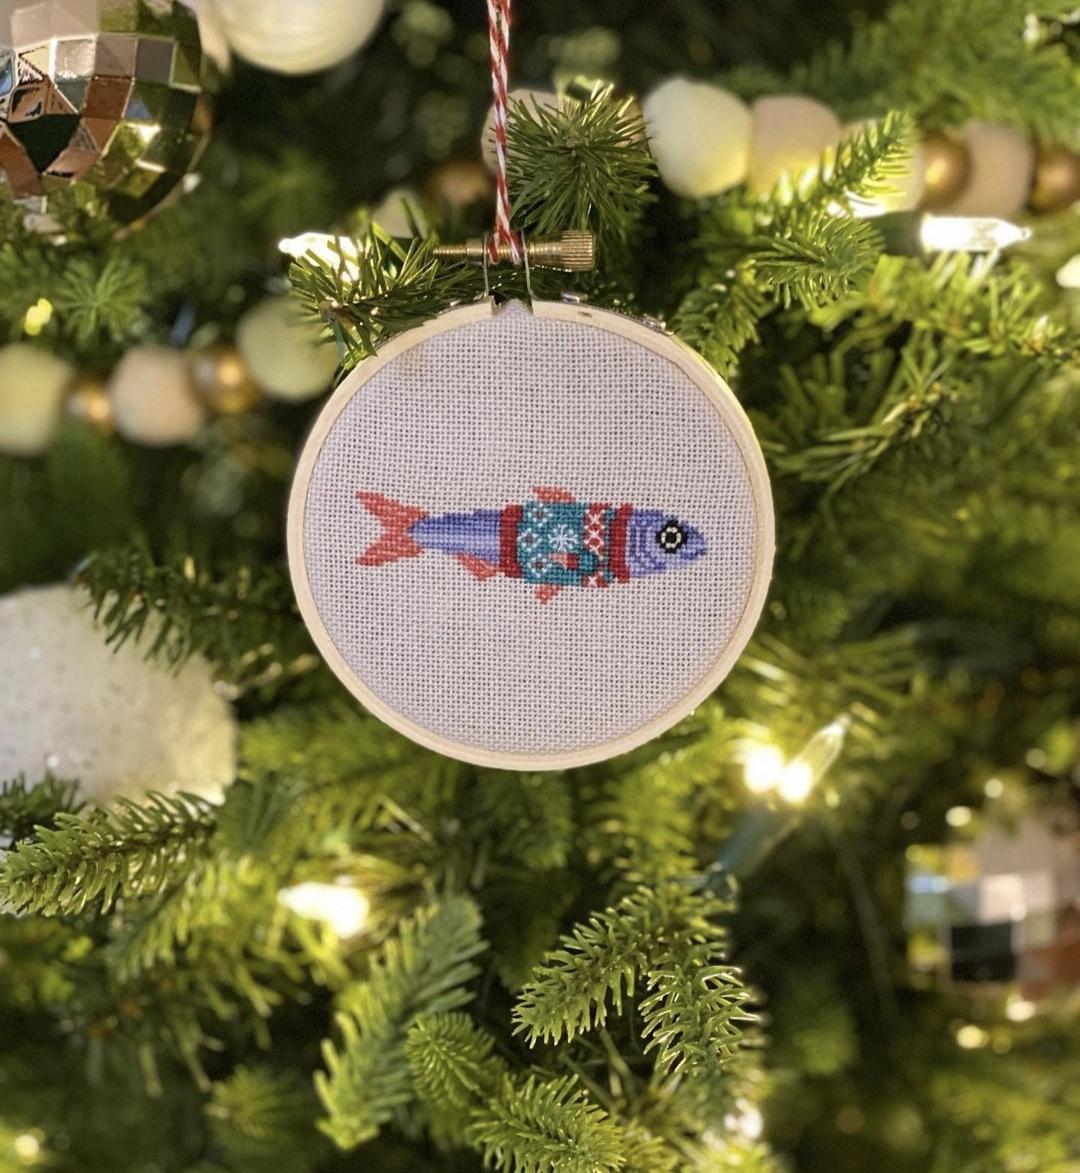 Christmas animals cross stitch pattern by Smasterilli